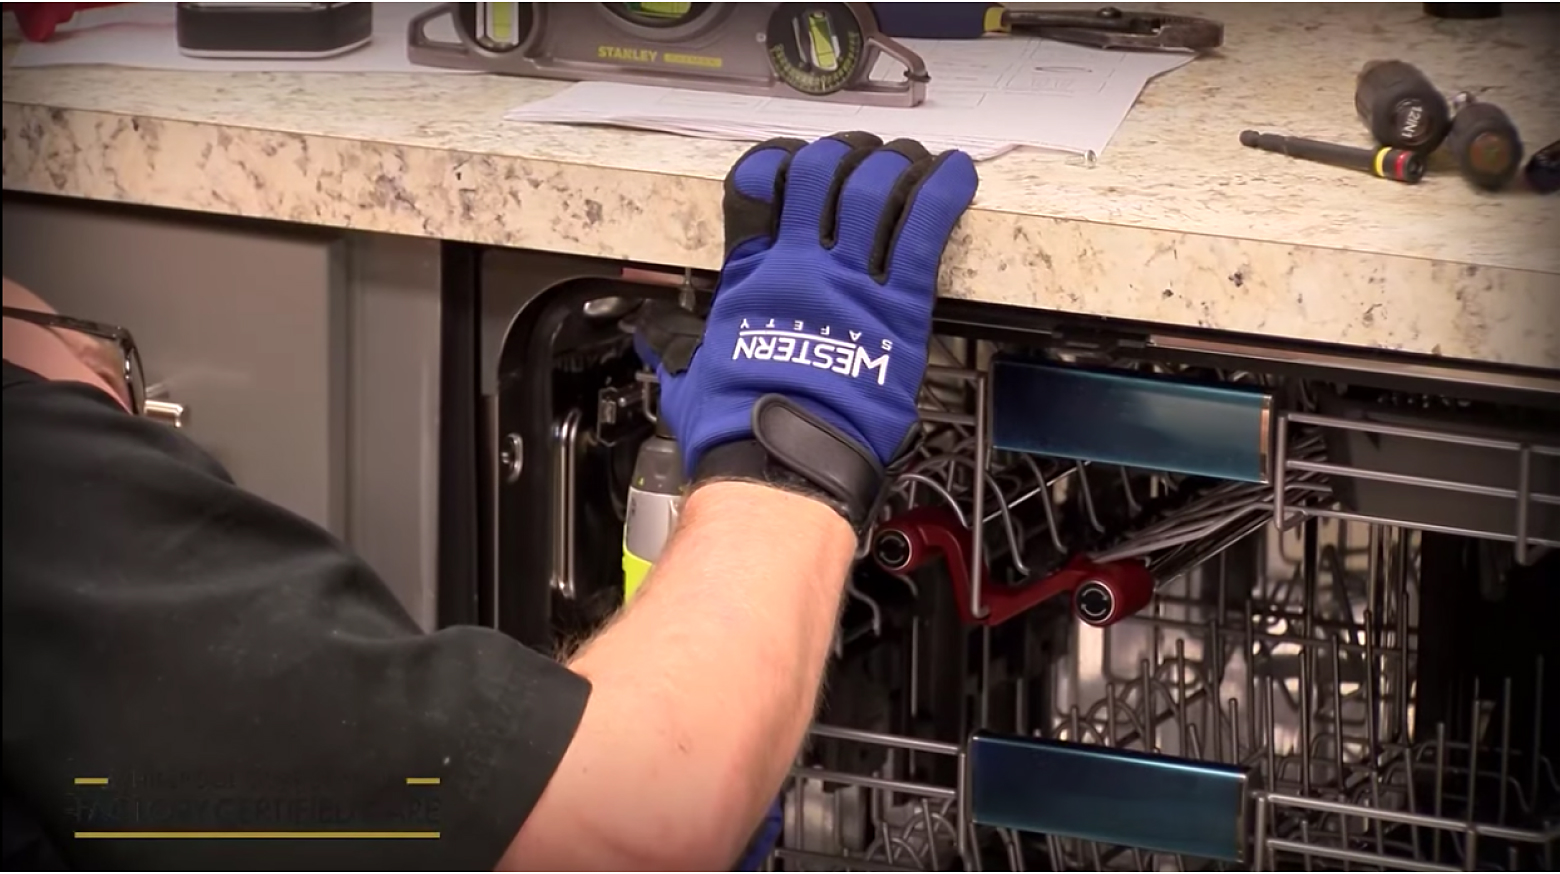 Hand touching countertop above an open dishwasher